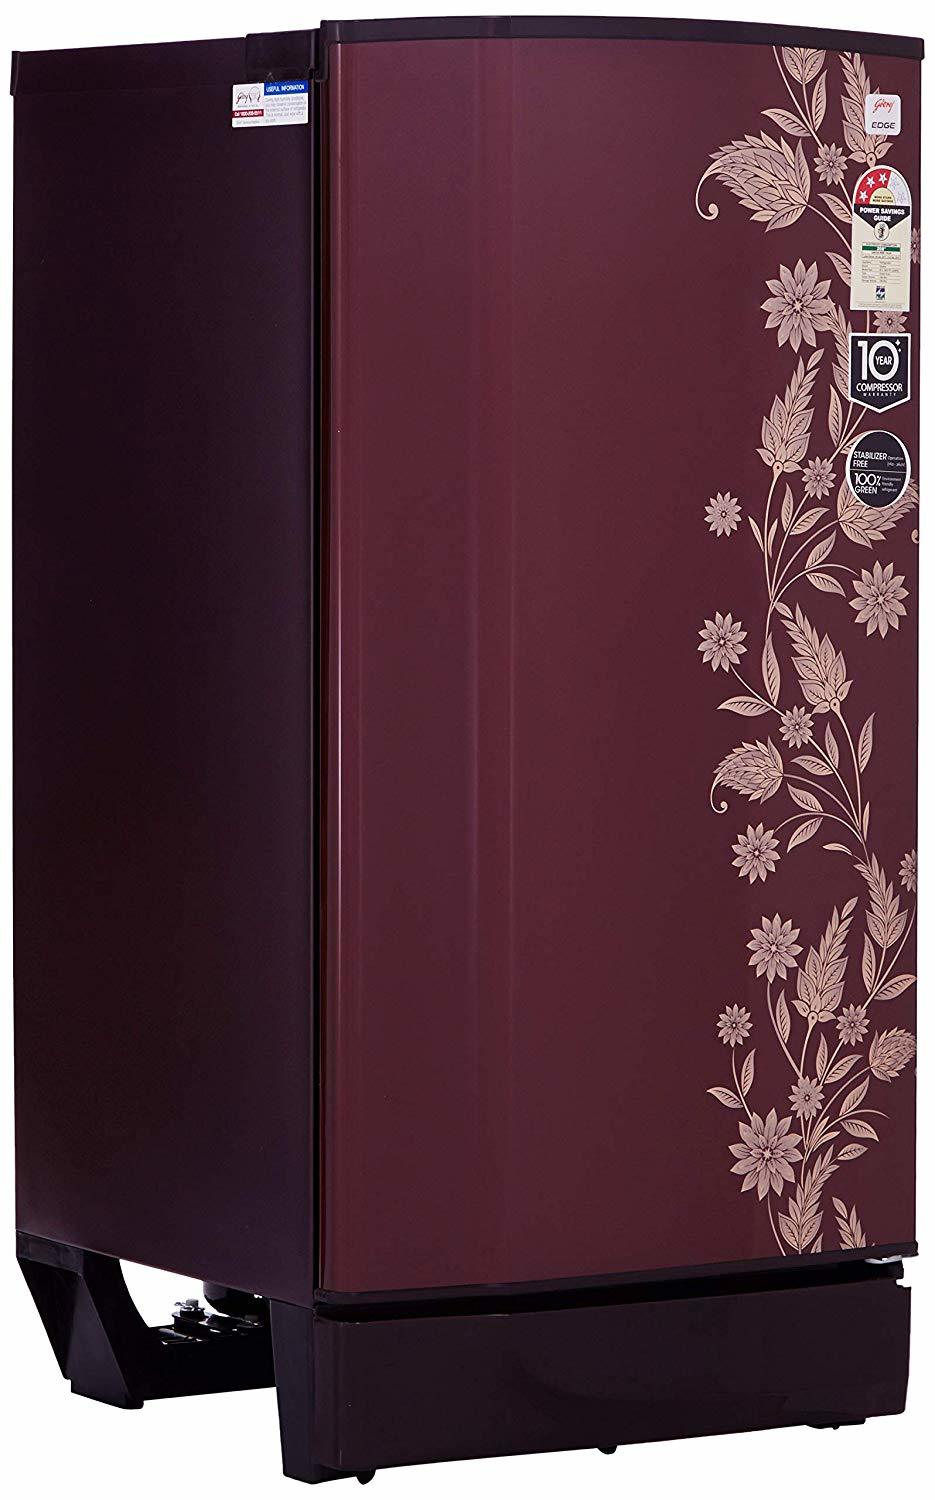 Godrej 190 L 3 Star (2019) Direct-Cool Single-Door Refrigerator (RD 1903 PT 3.2, Scarlet Dremin)